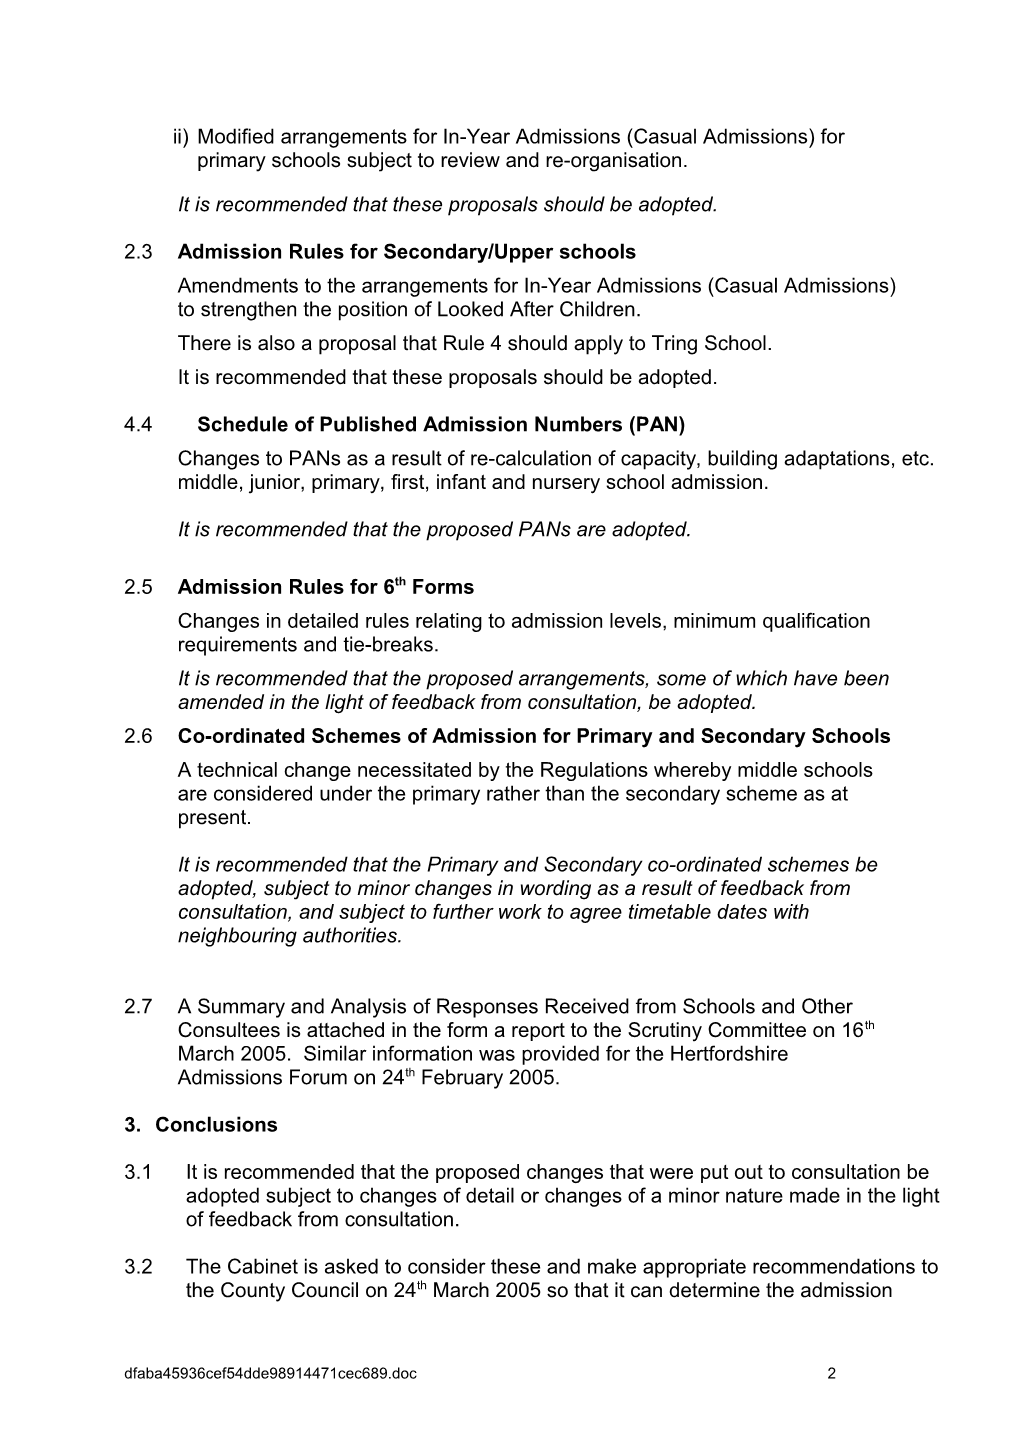 Consultation on Admission Arrangements for 2006-2007